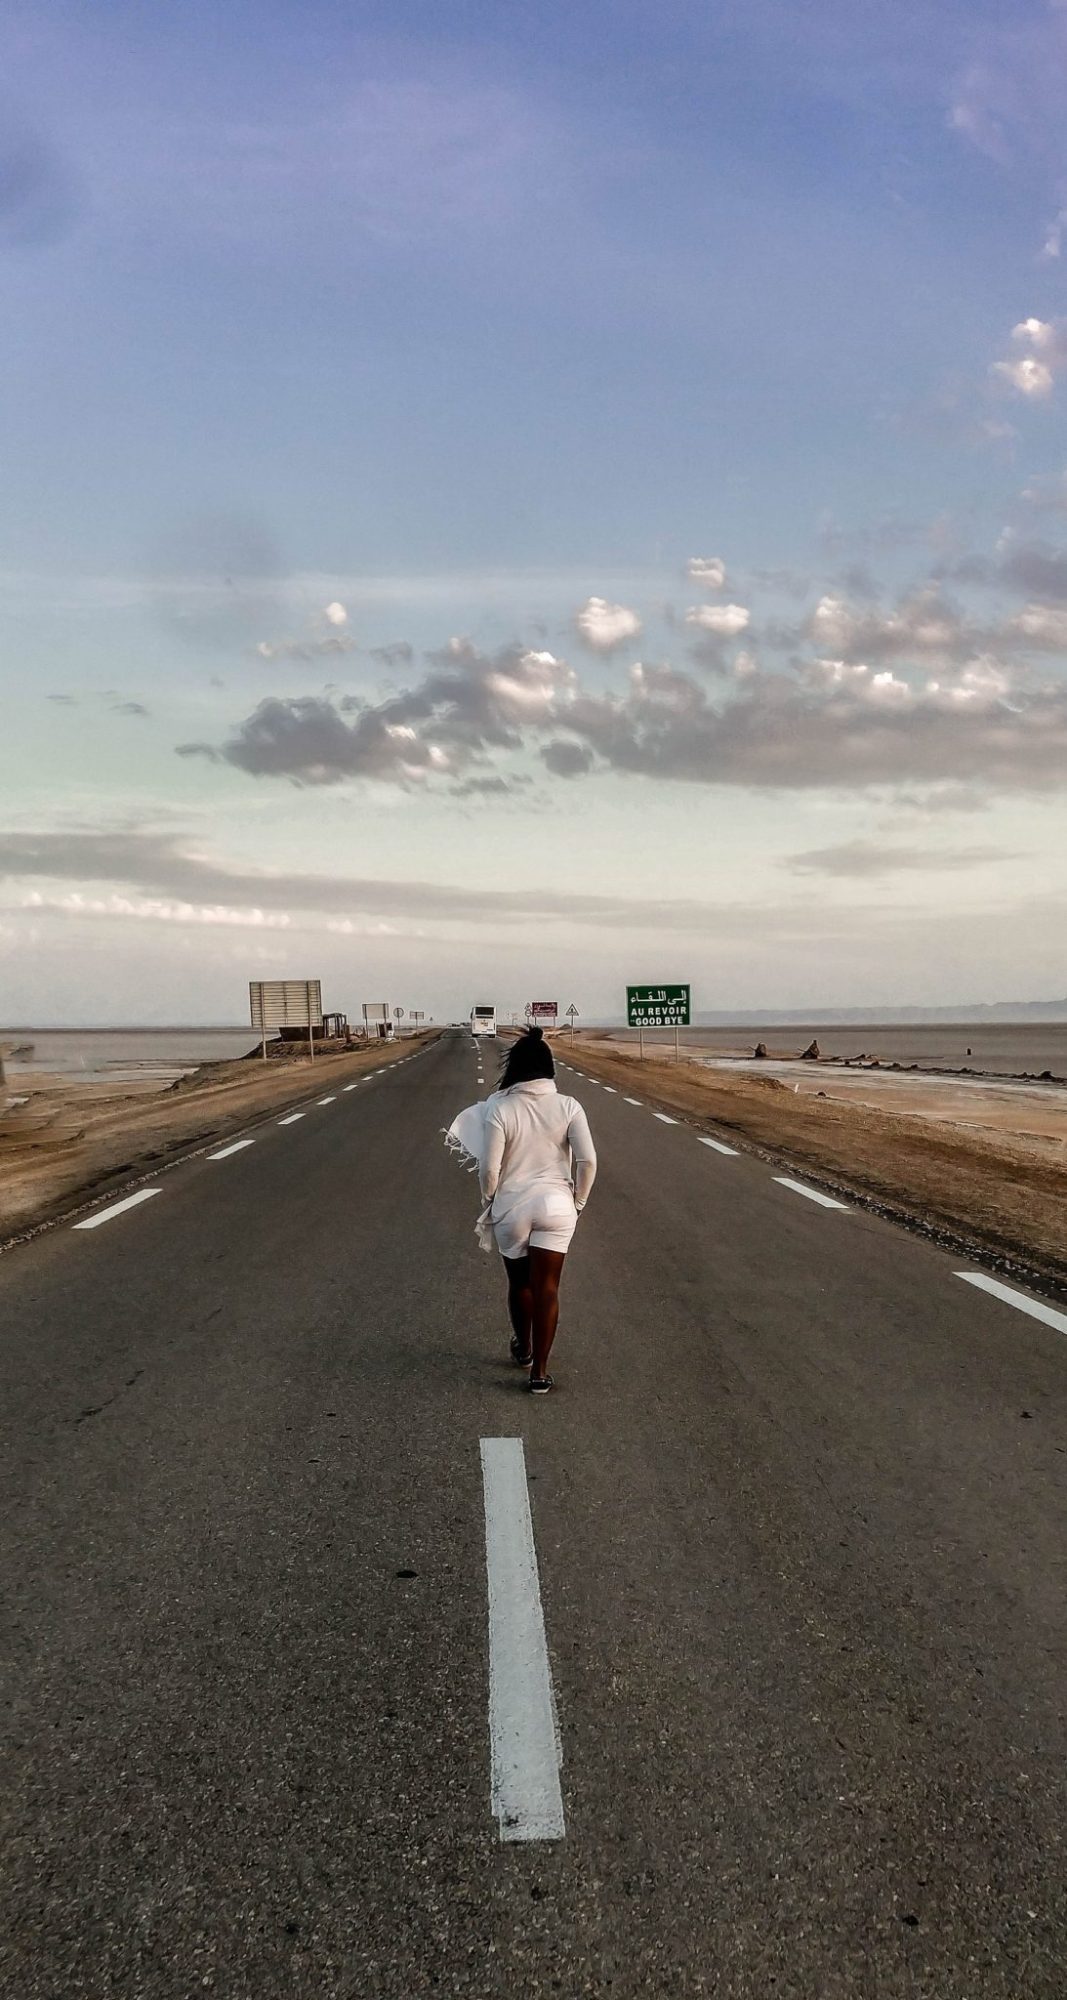 Walking the road between Tunisia and Algeria along the salt flats